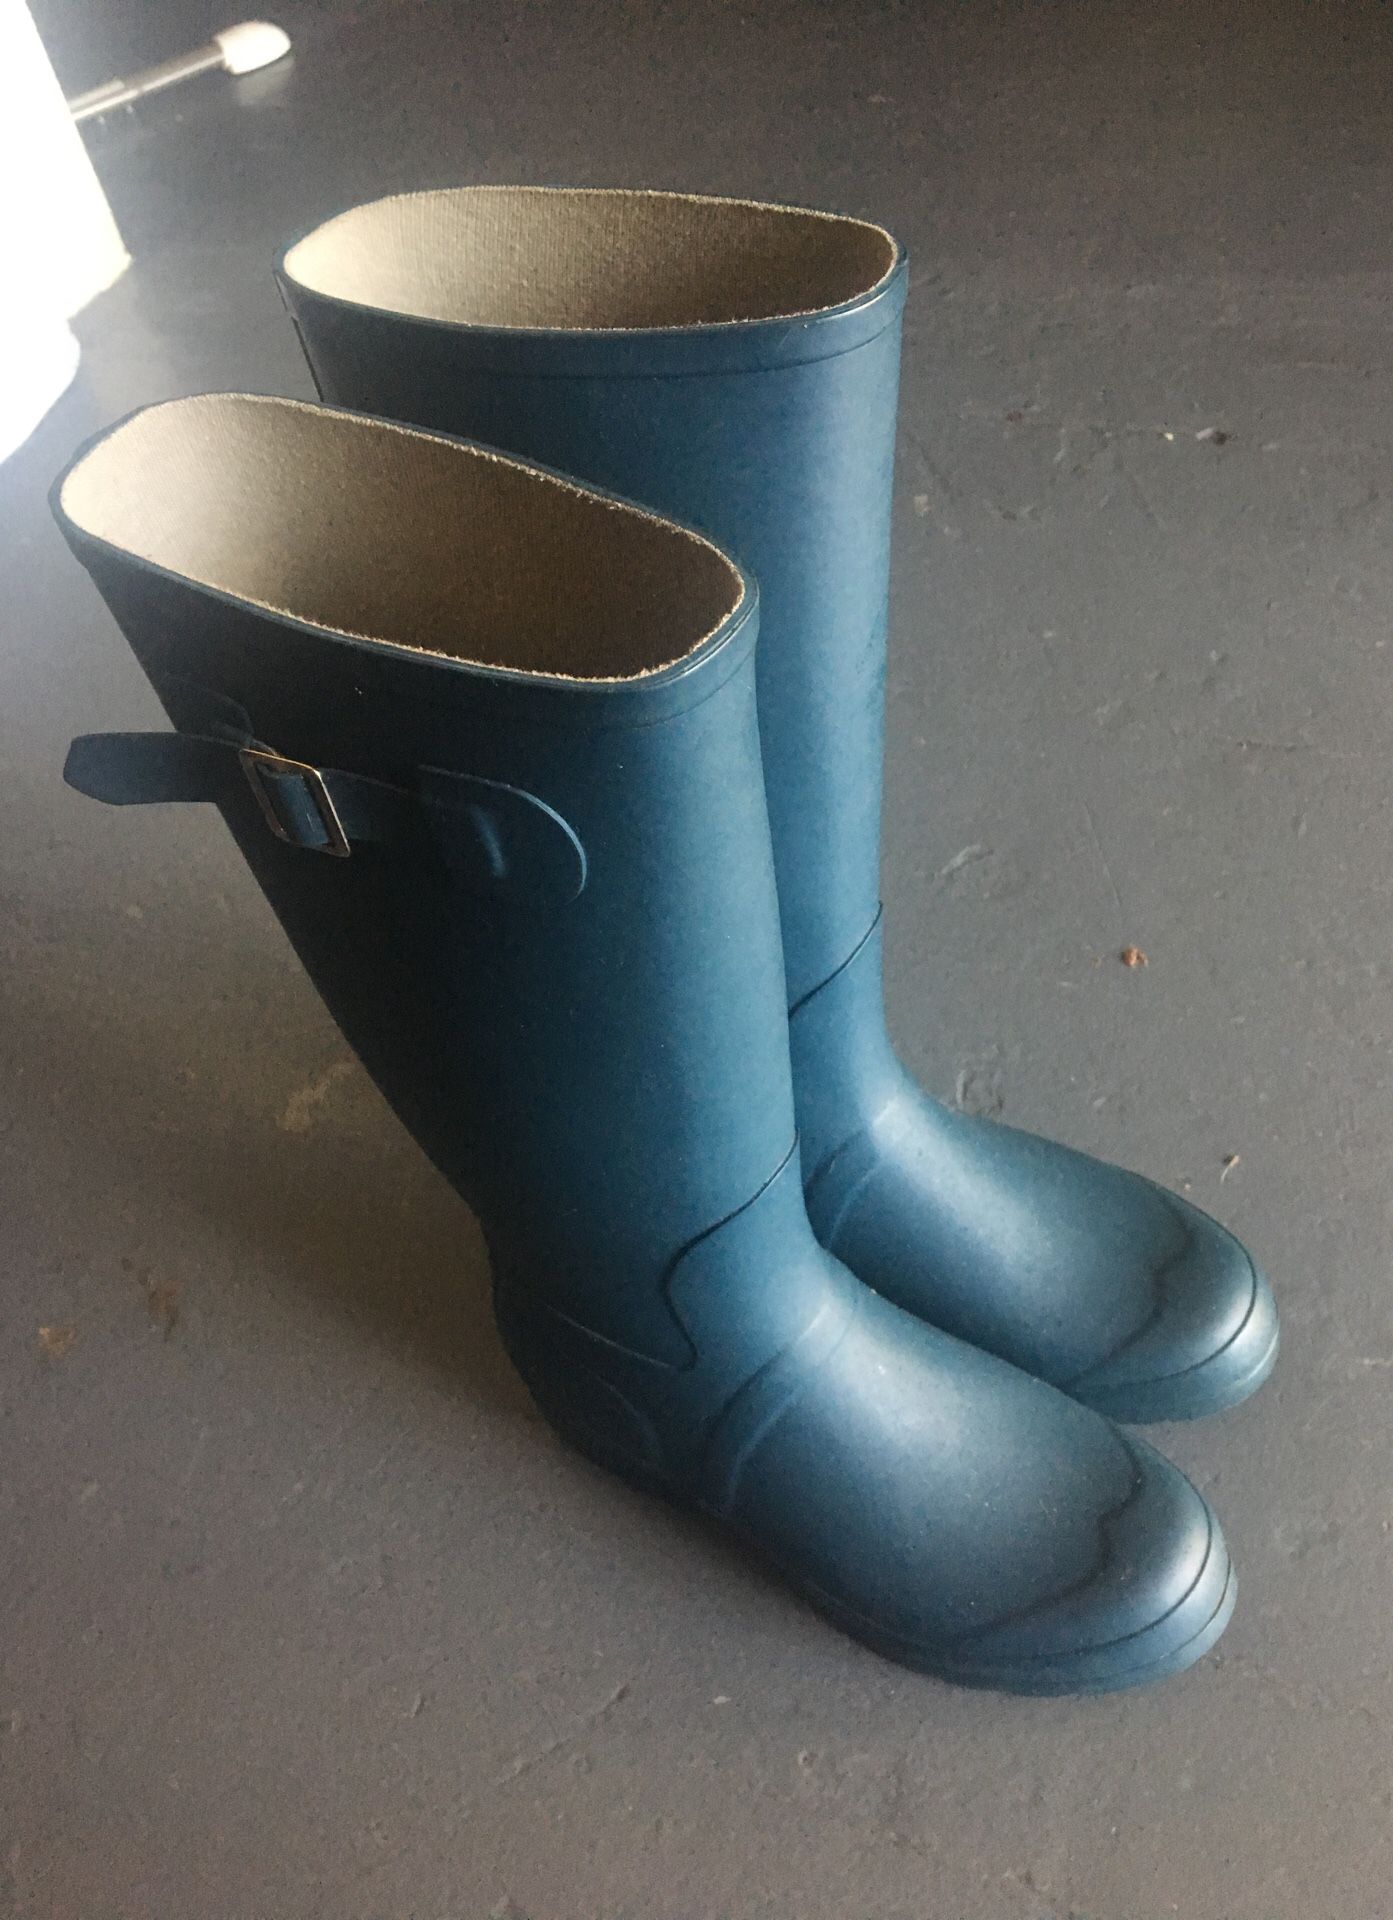 Nomad size 8 rain boots